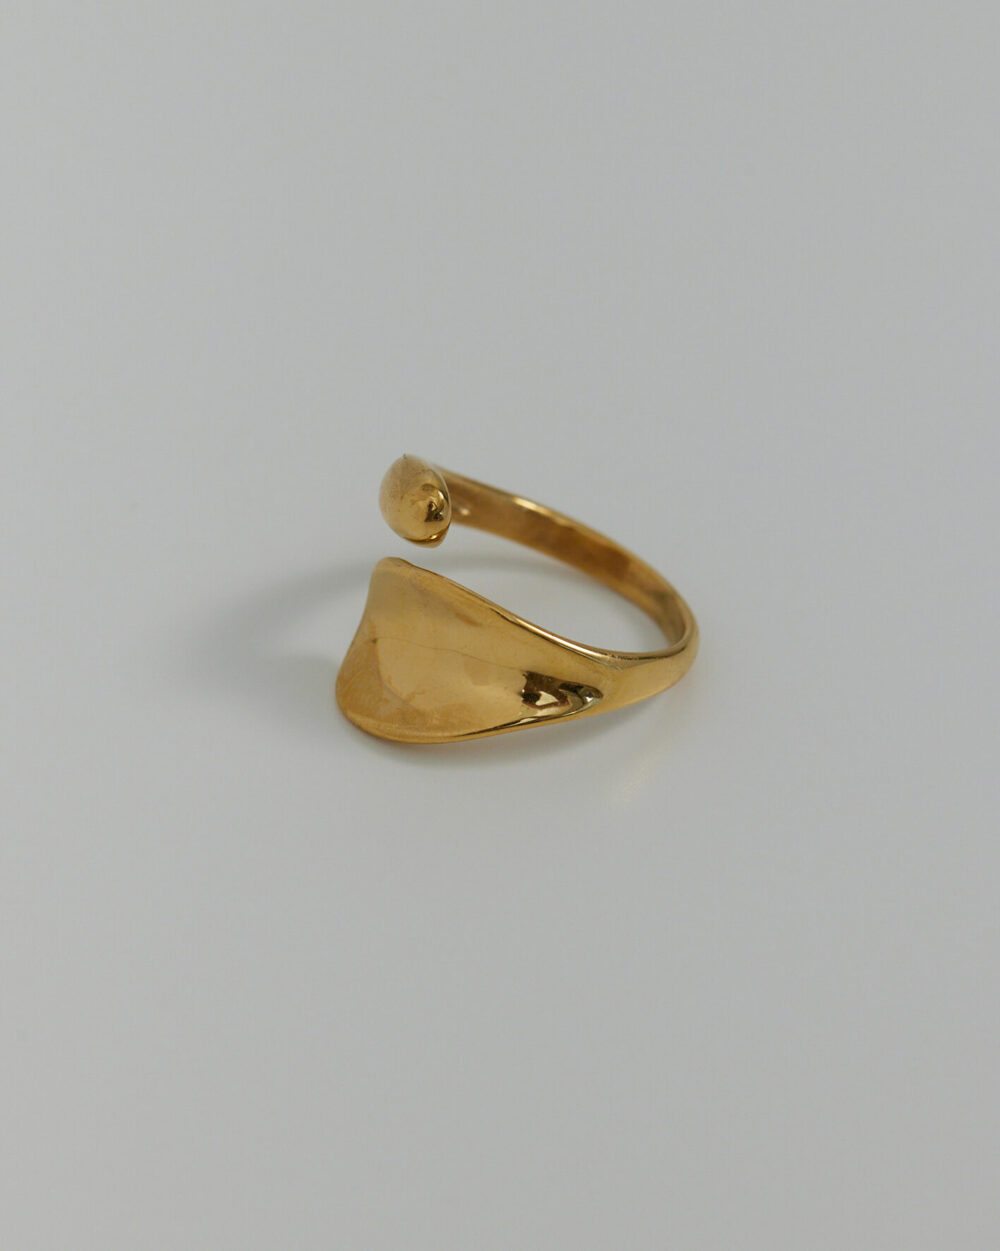 Eco安珂,韓國飾品,韓國戒指,醫療鋼戒指,個性戒指,寬版戒